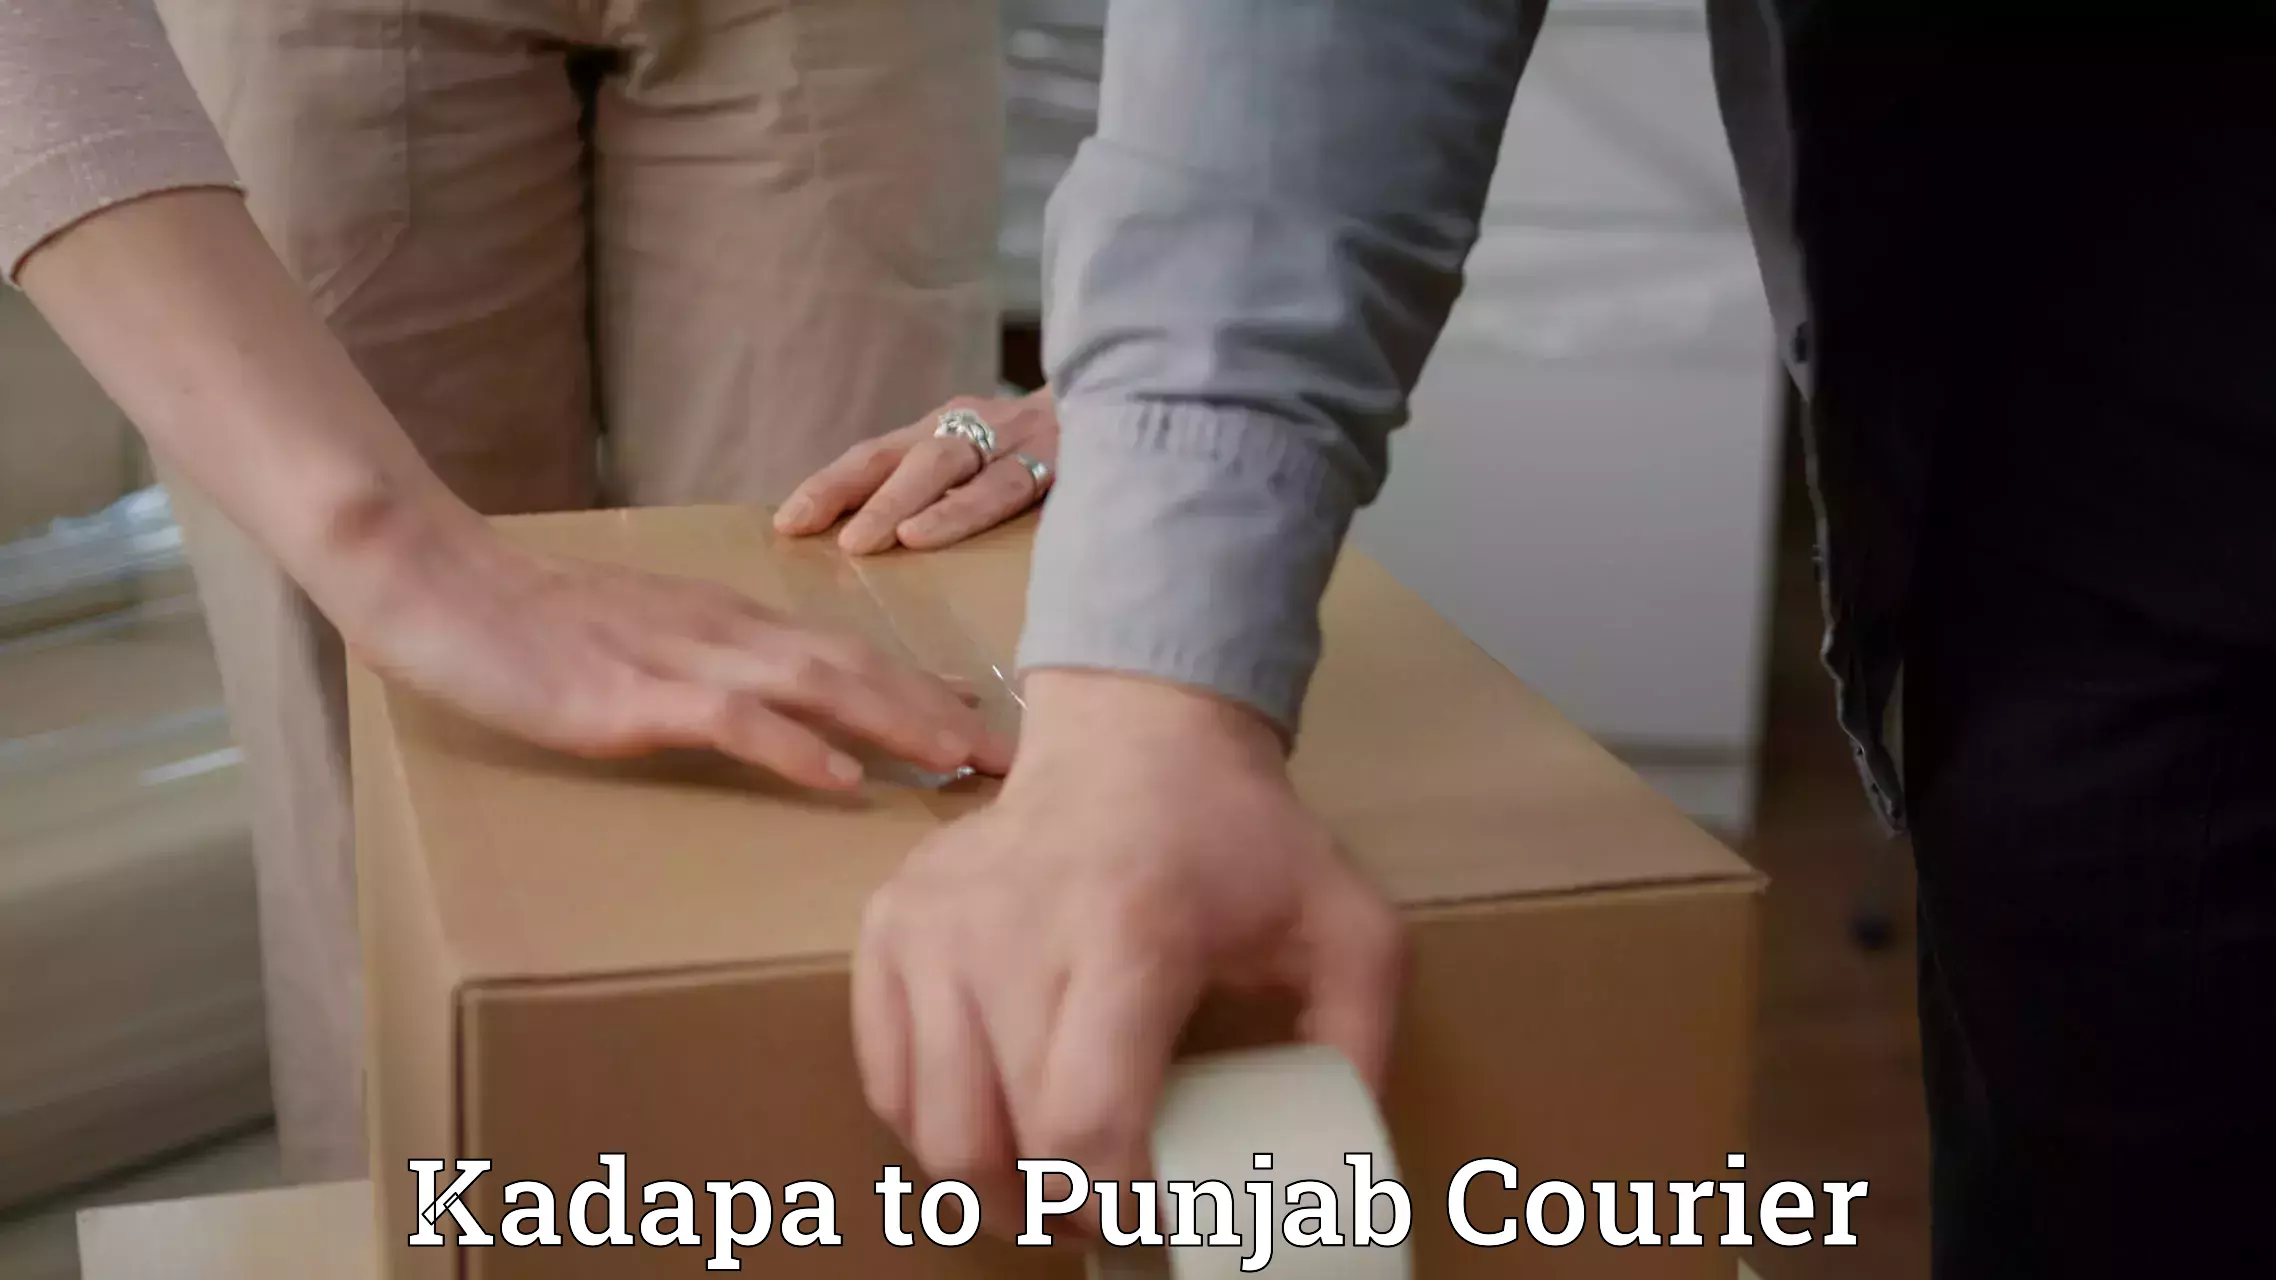 Professional courier handling Kadapa to Ludhiana